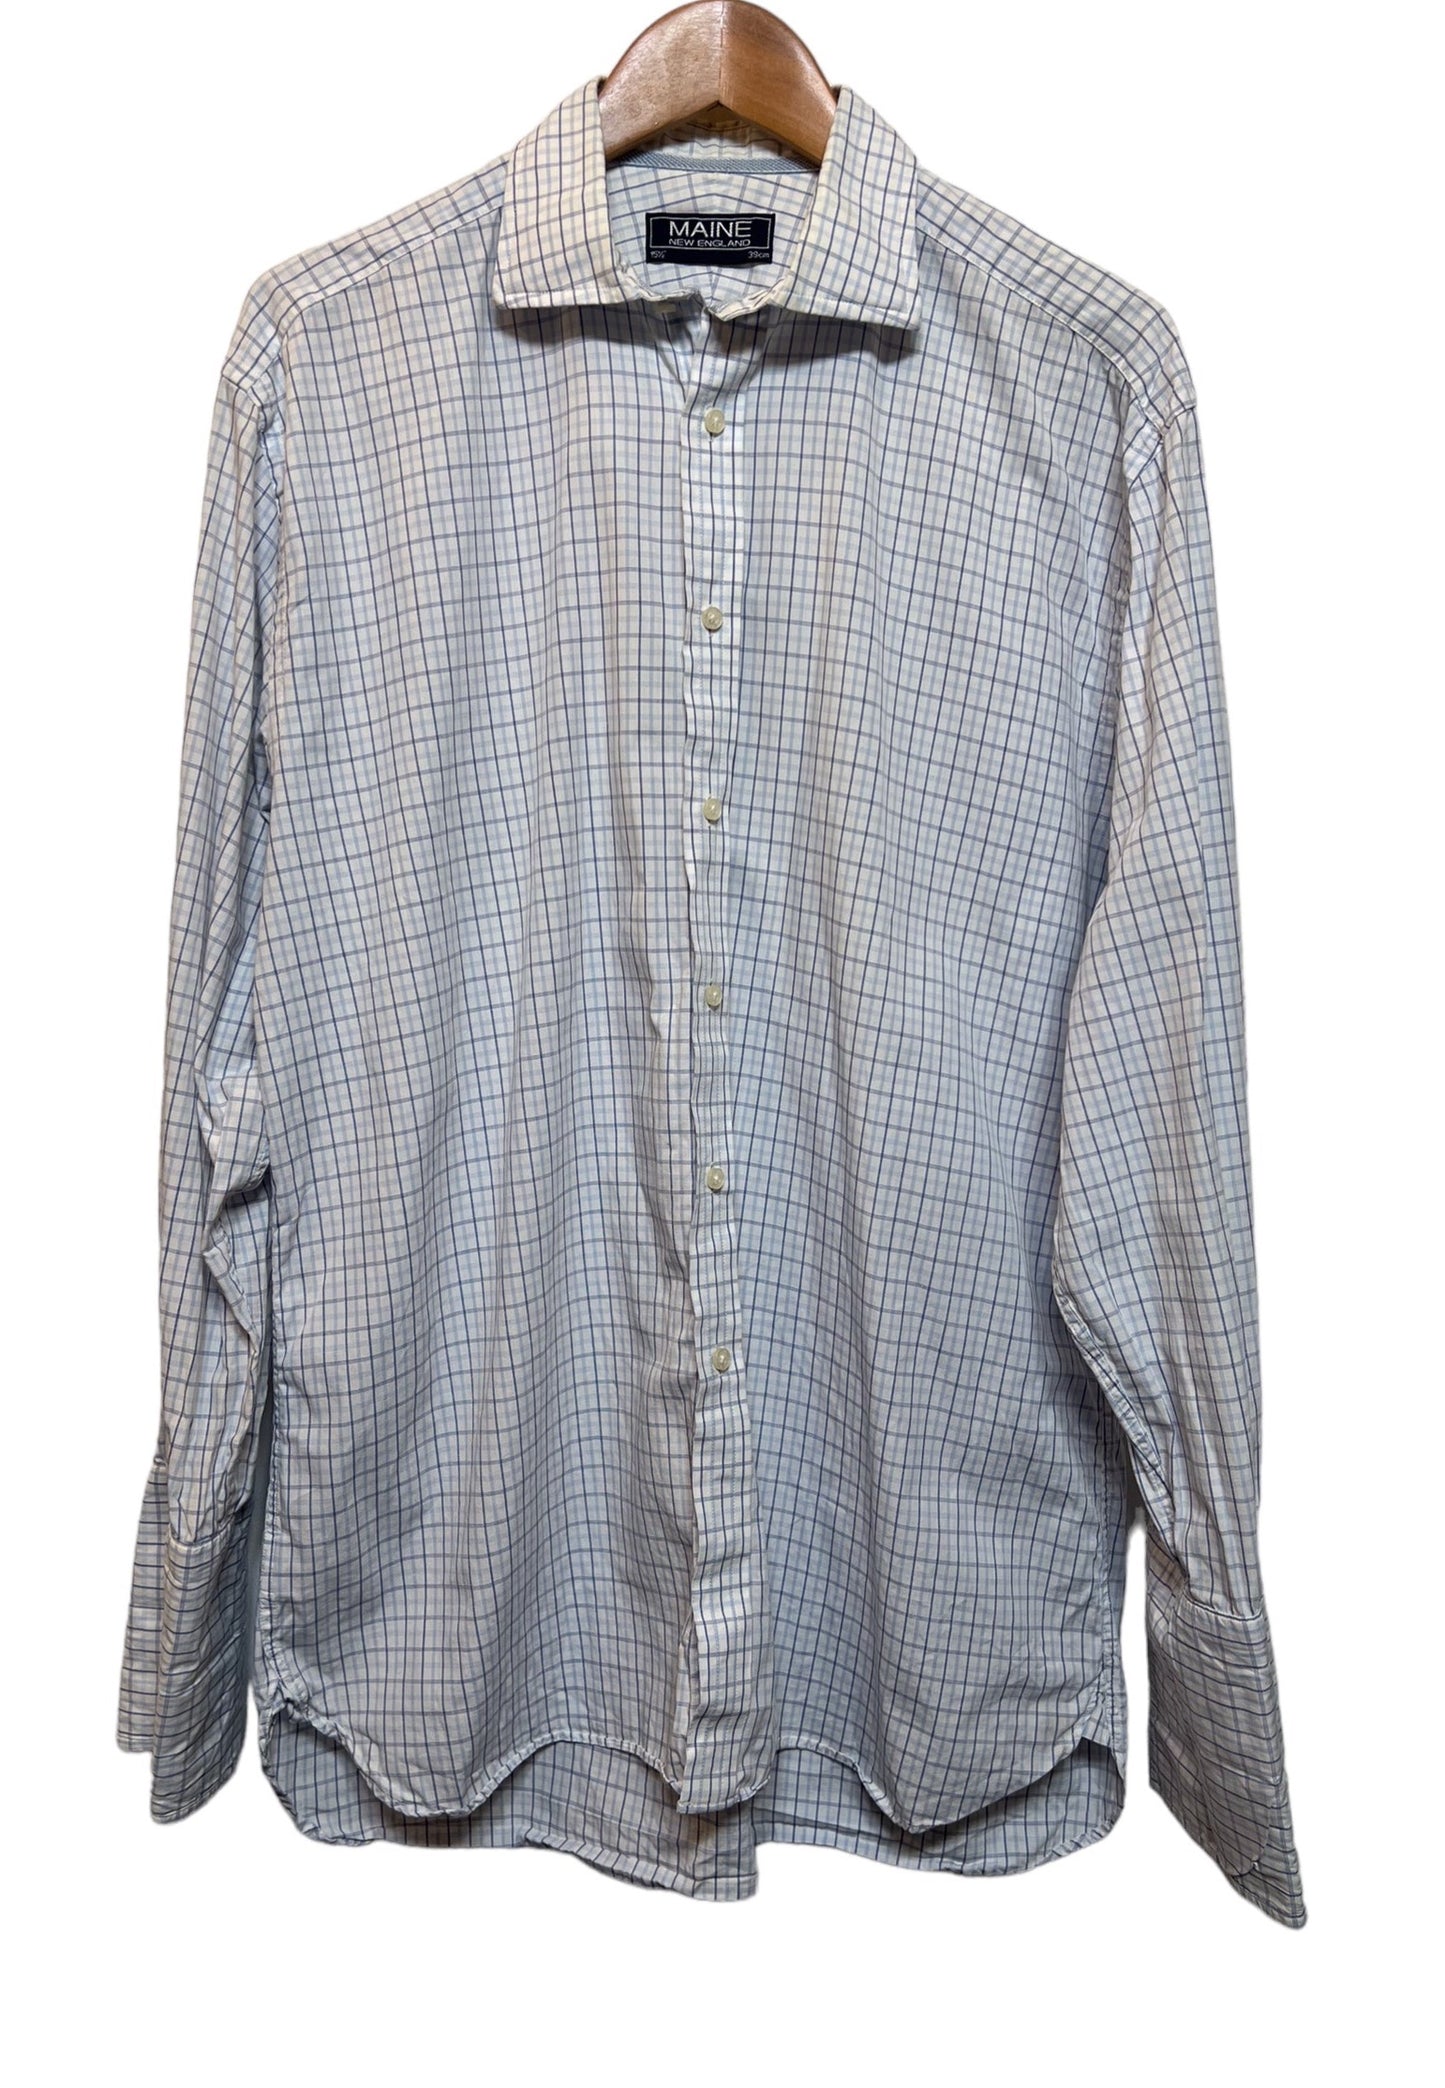 Maine England Men’s Formal Long Sleeve Shirt (Size XL)